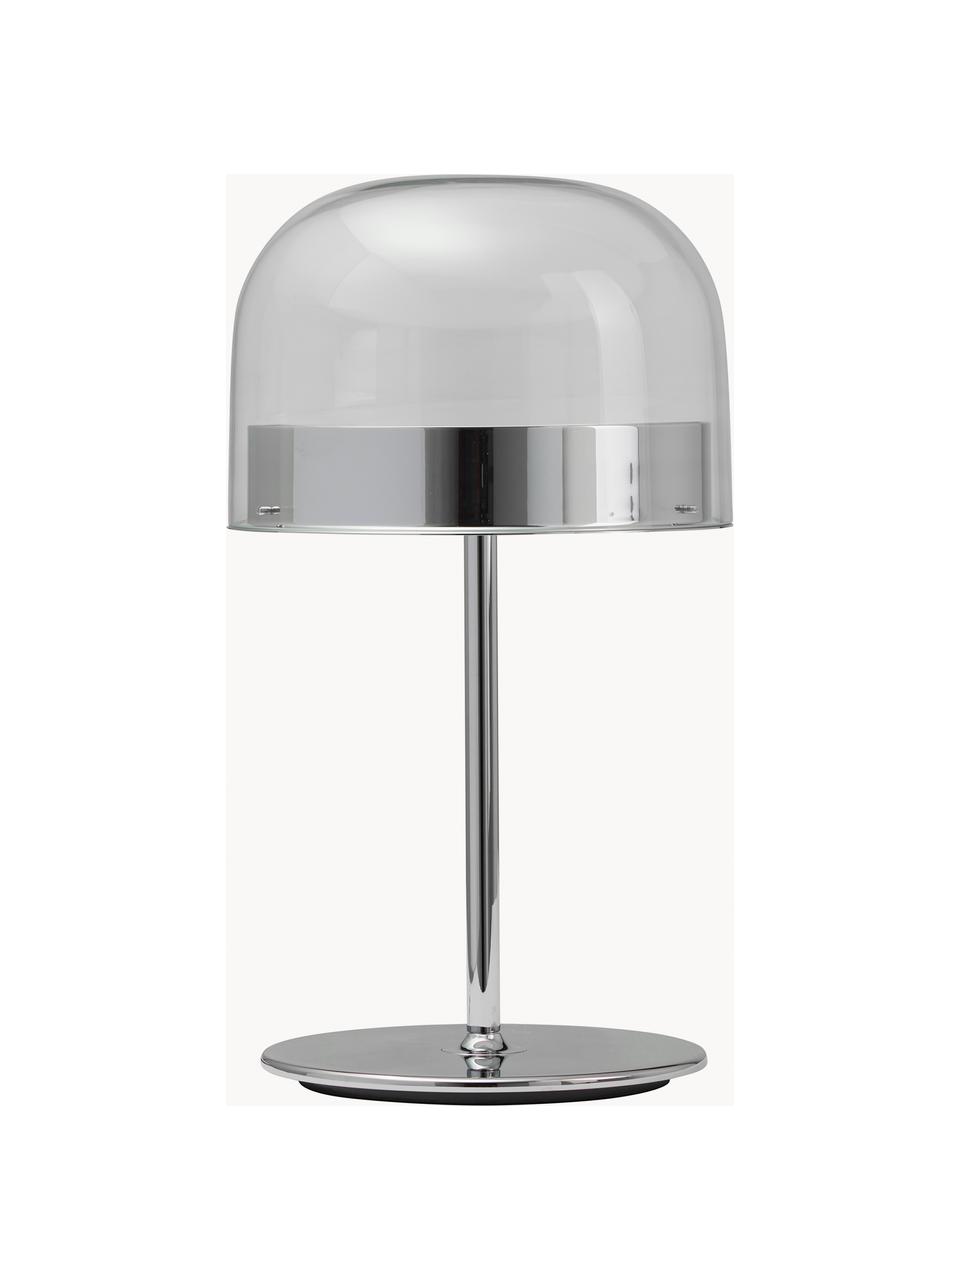 Handgemaakte LED tafellamp Equatore, Lampenkap: glas, gegalvaniseerd meta, Transparant, zilverkleurig, Ø 24 x H 43 cm